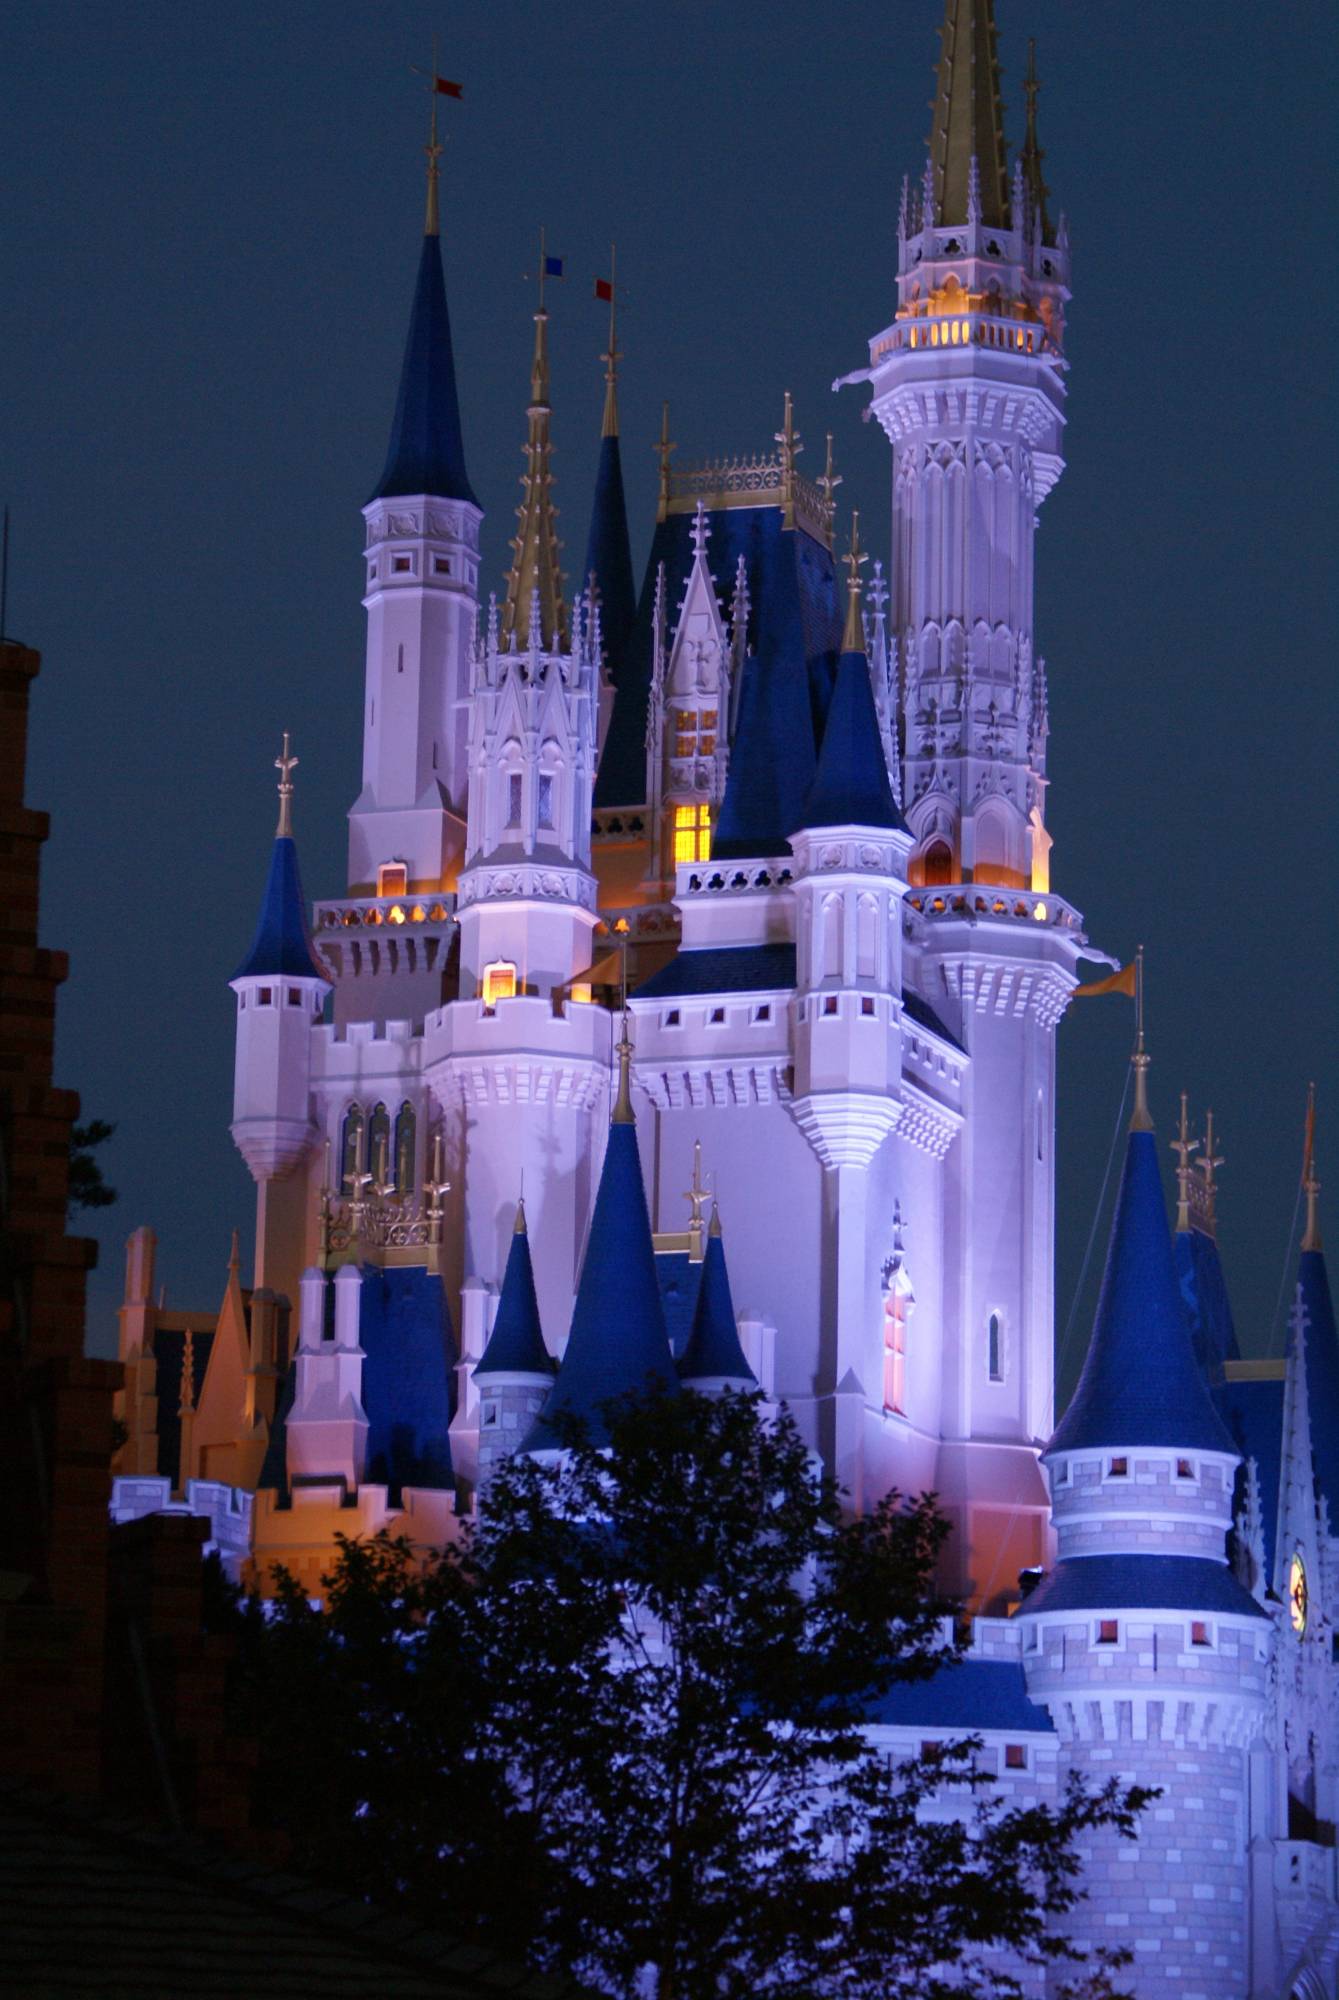 Cinderella's Castle Lit Up for Night